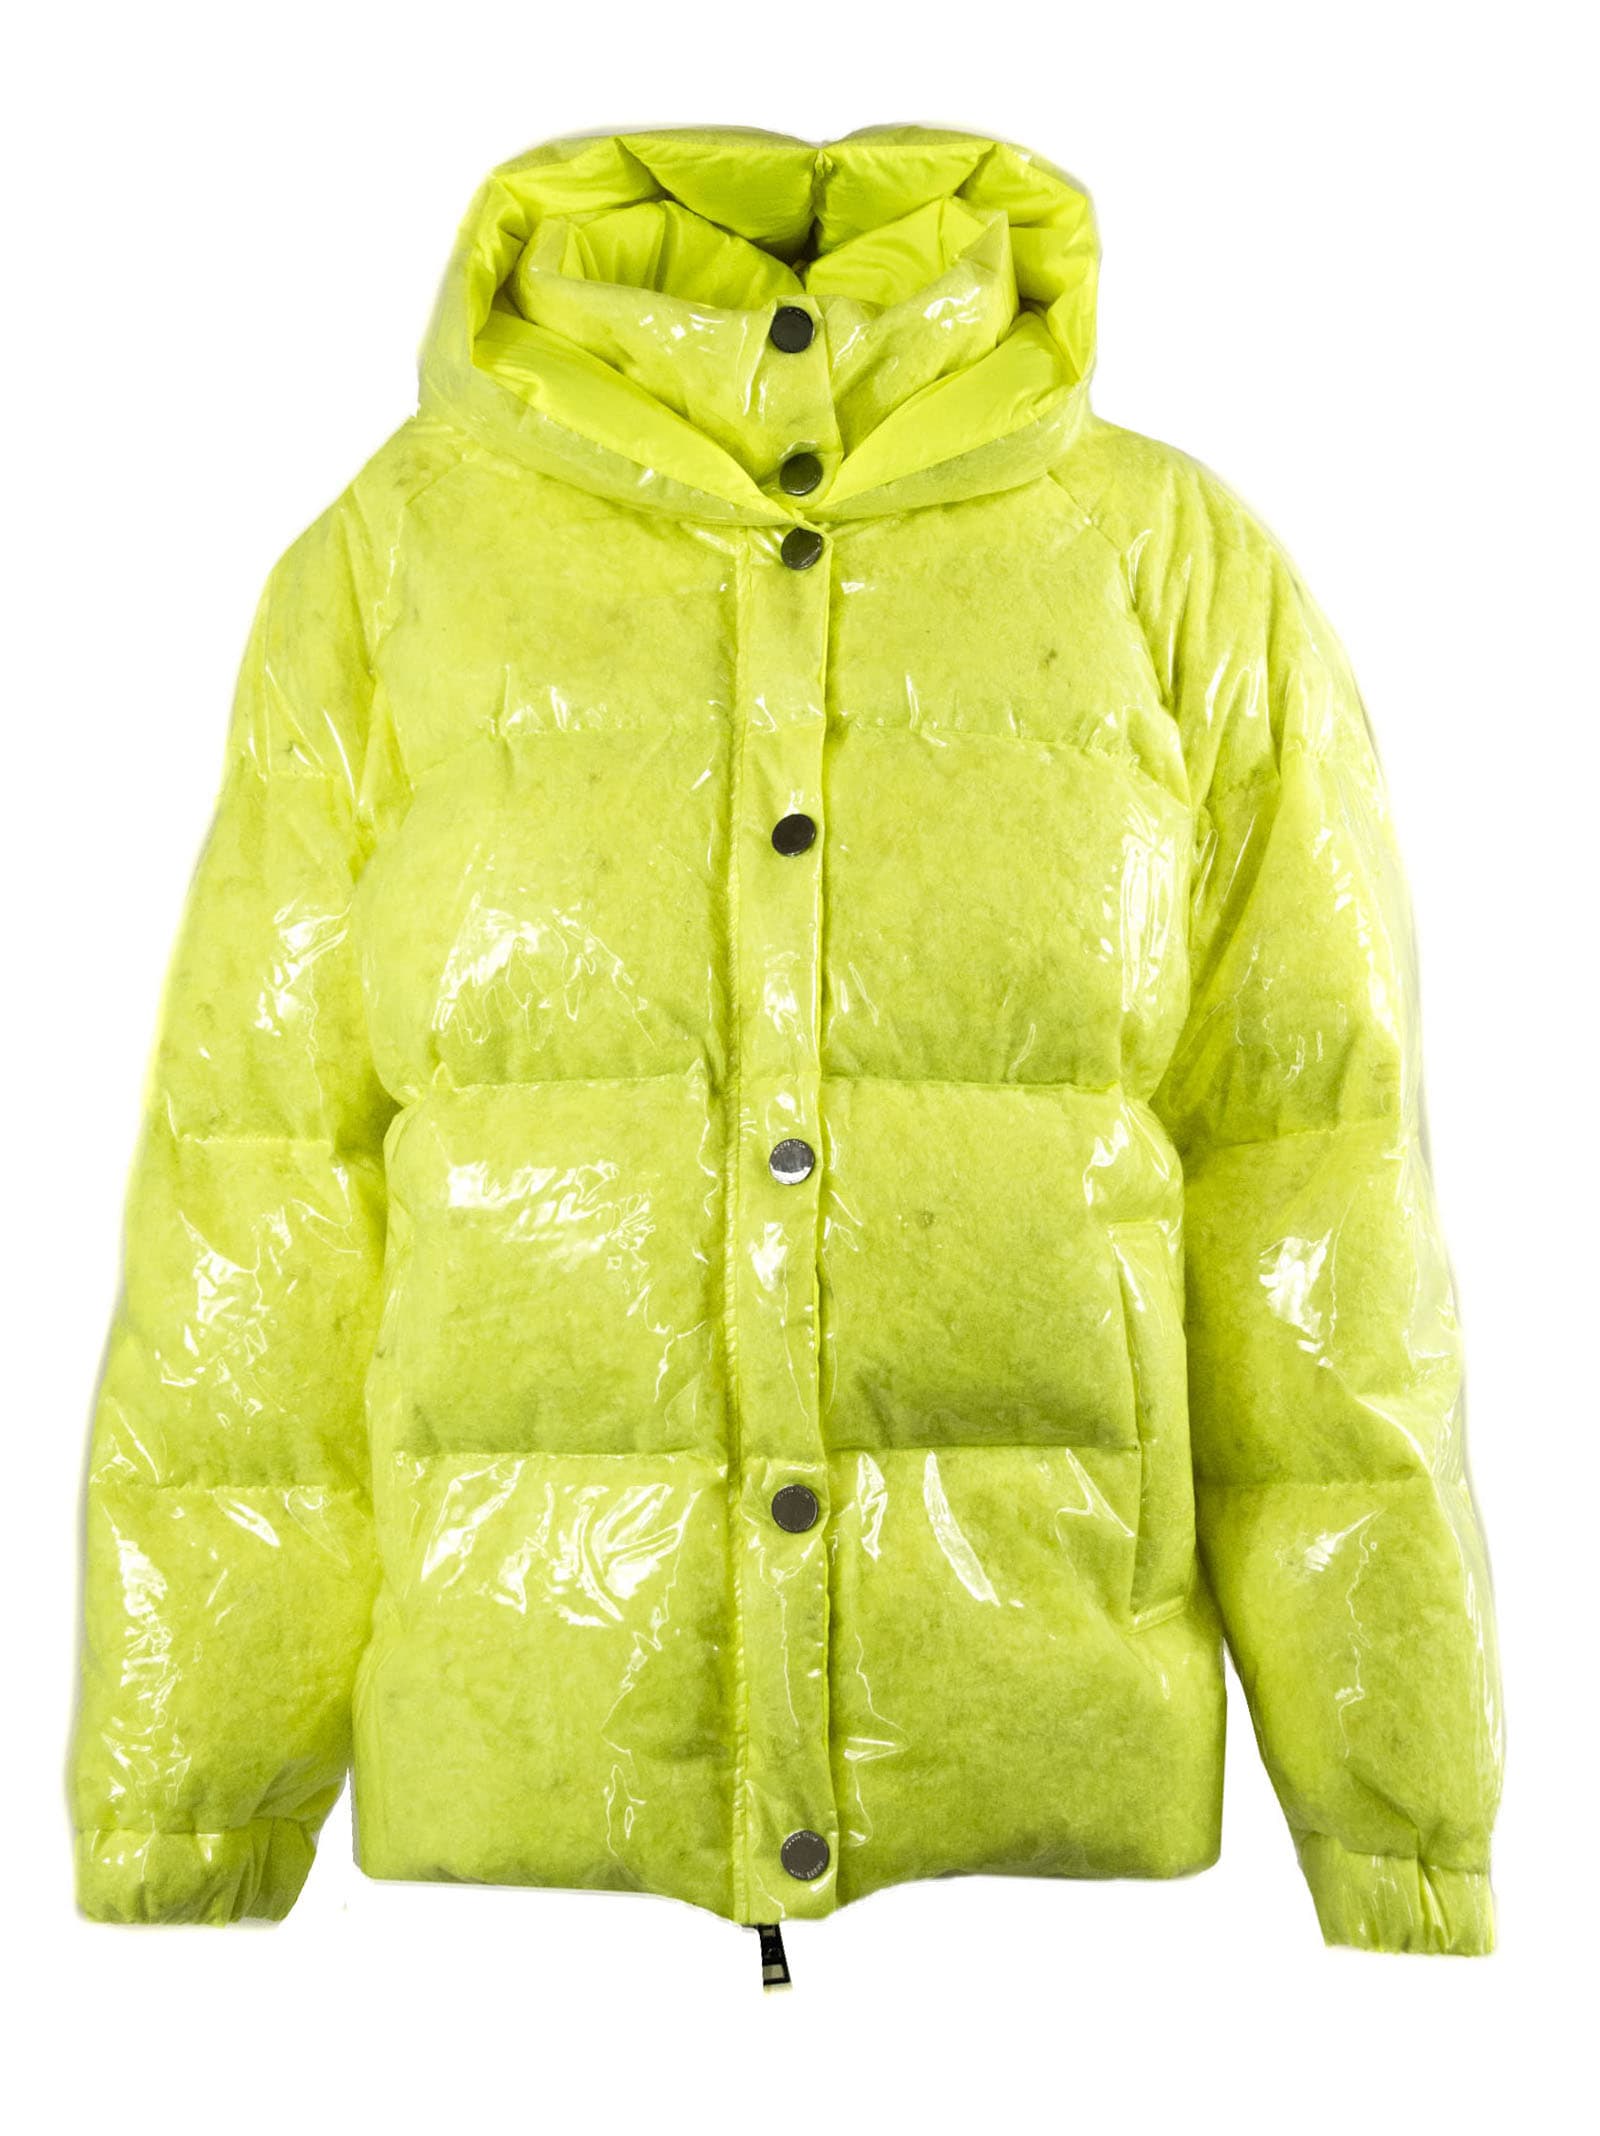 Goose Tech Down Jacket In Fluorescent Yellow | Coshio Online Shop